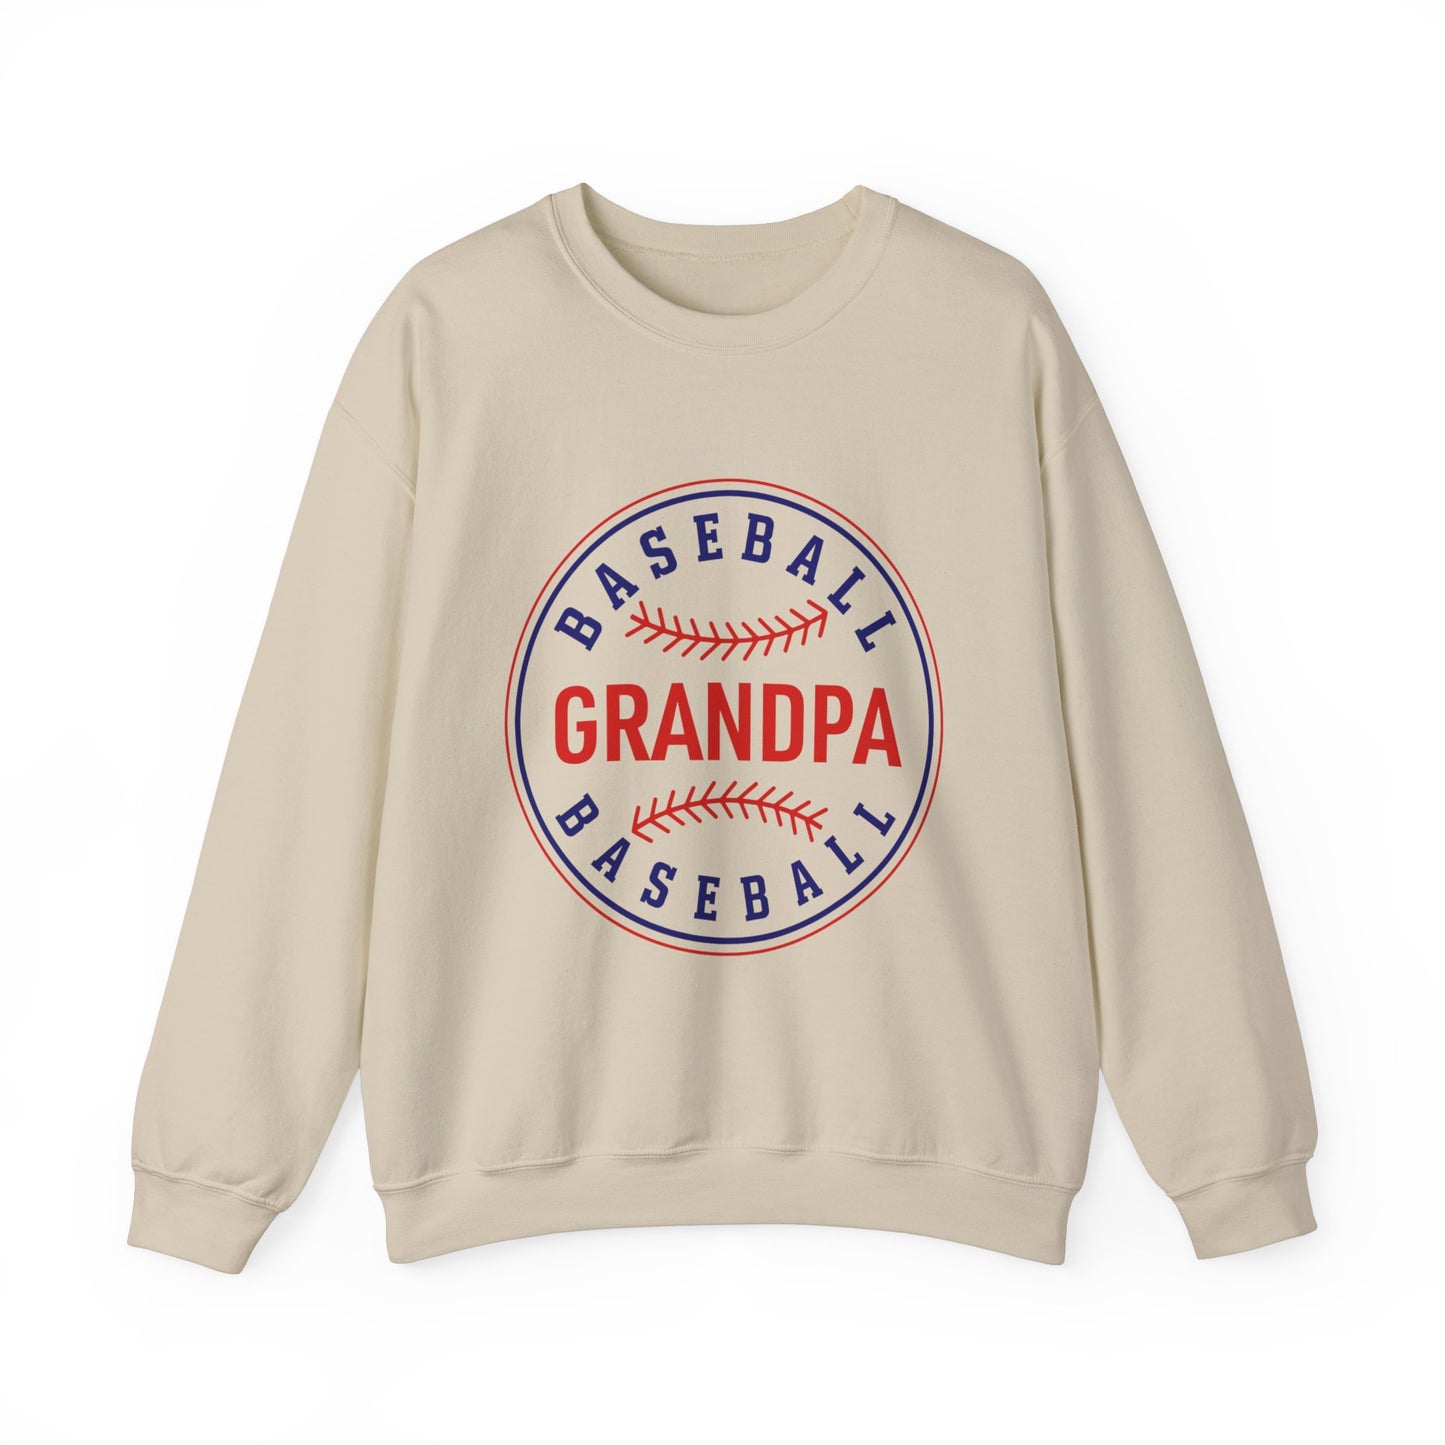 Baseball Grandpa Crewneck Sweatshirt